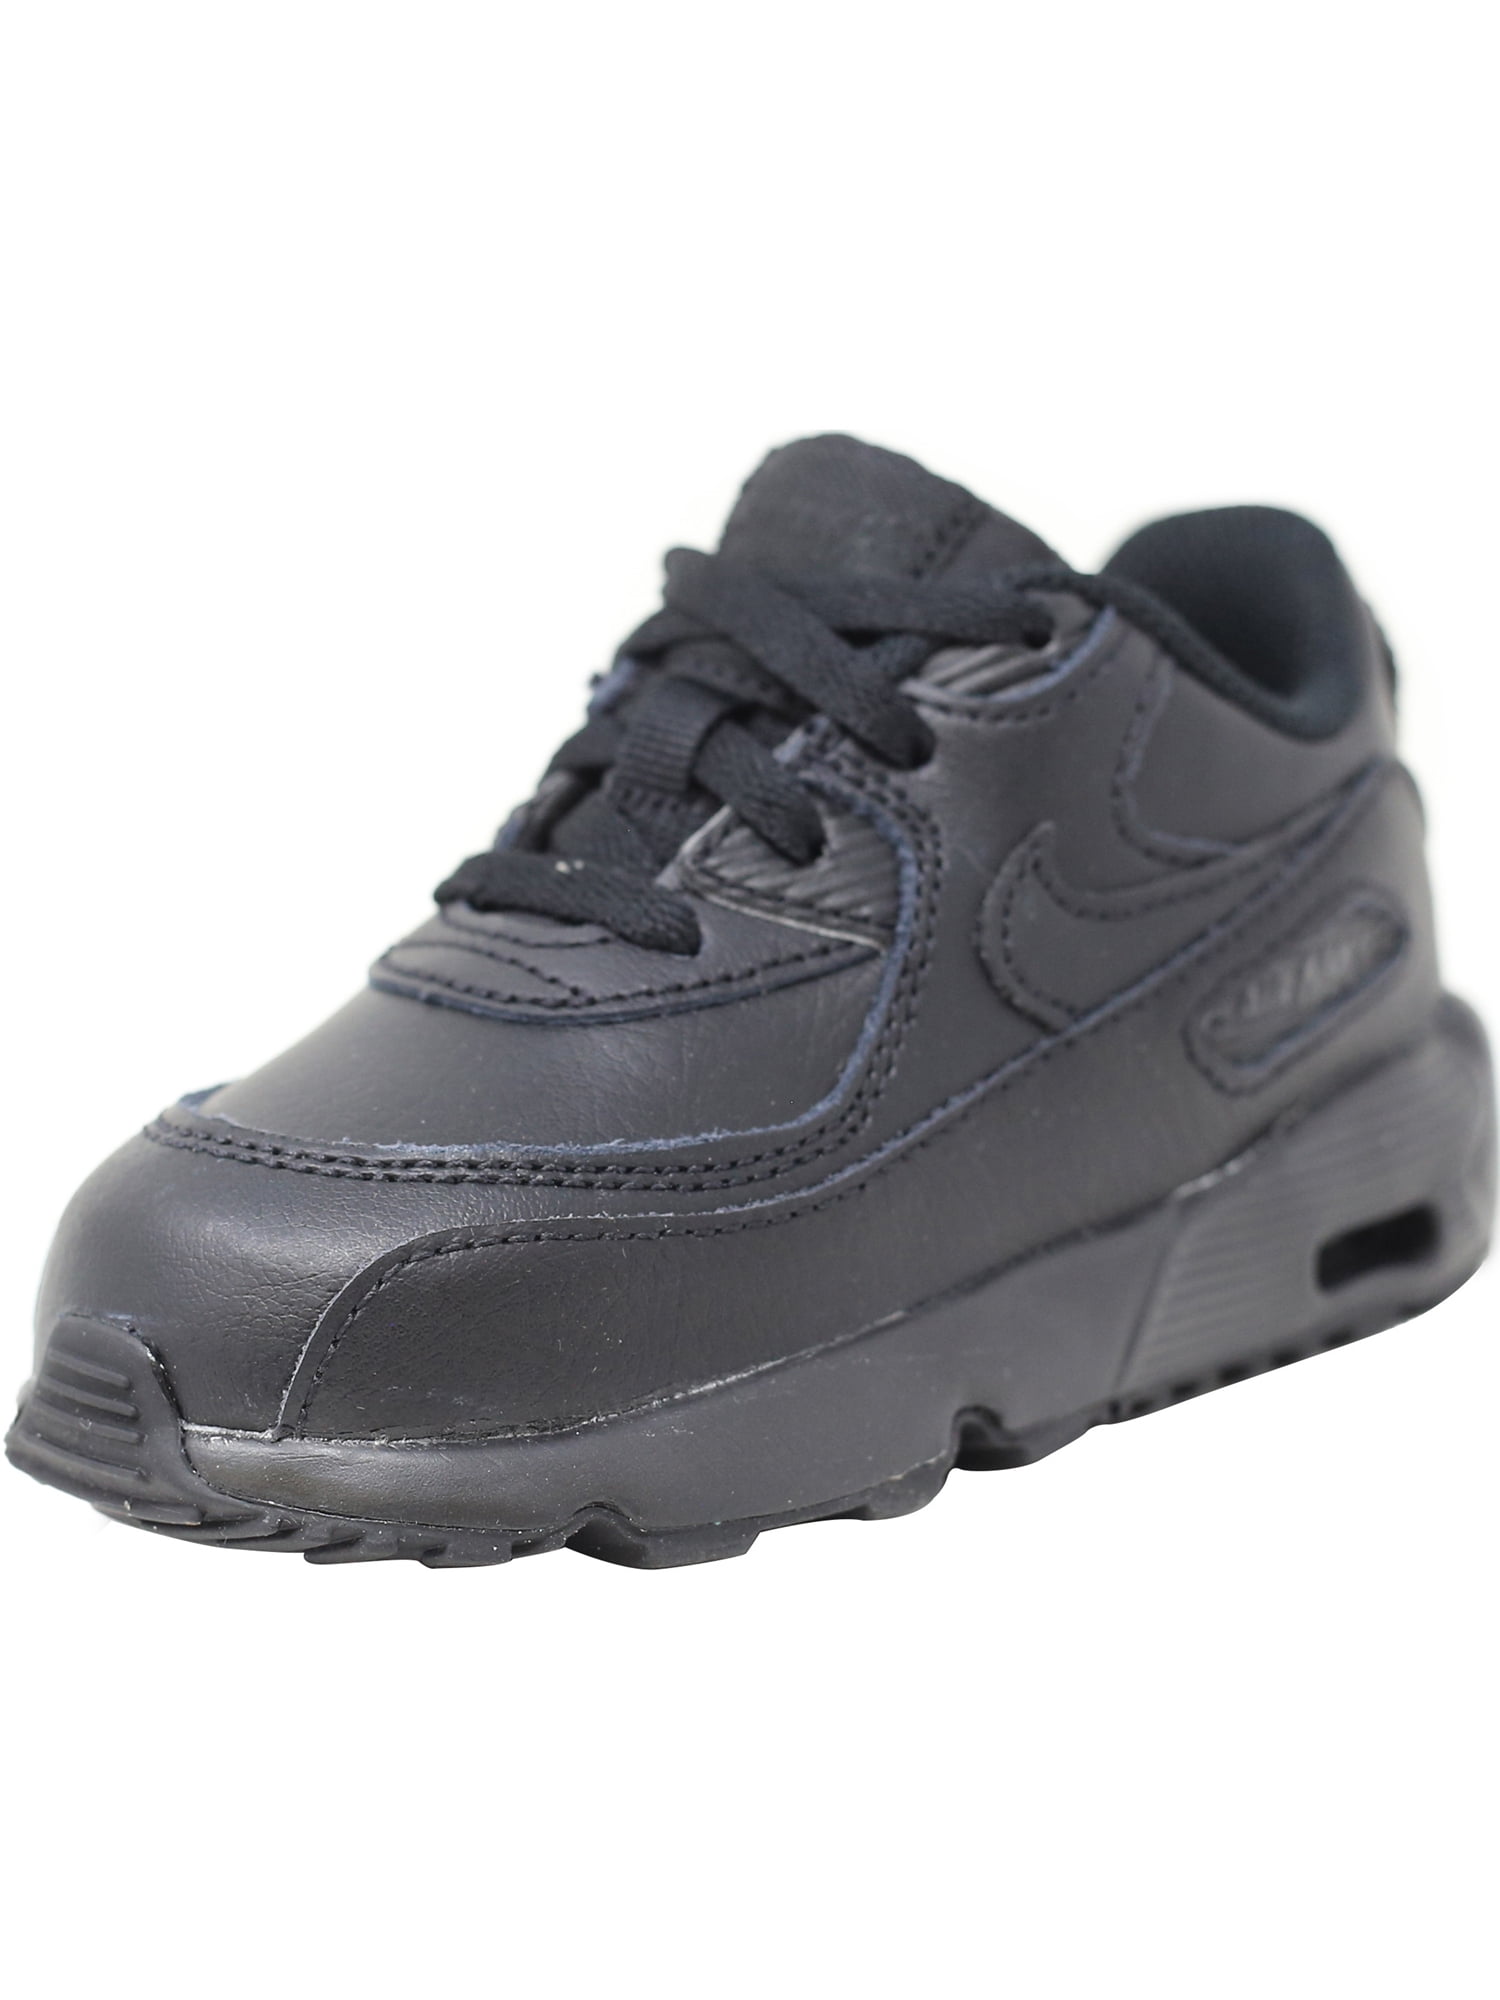 ozon Schep De slaapkamer schoonmaken Nike Air Max 90 Leather Black / Ankle-High Fashion Sneaker - 8M -  Walmart.com